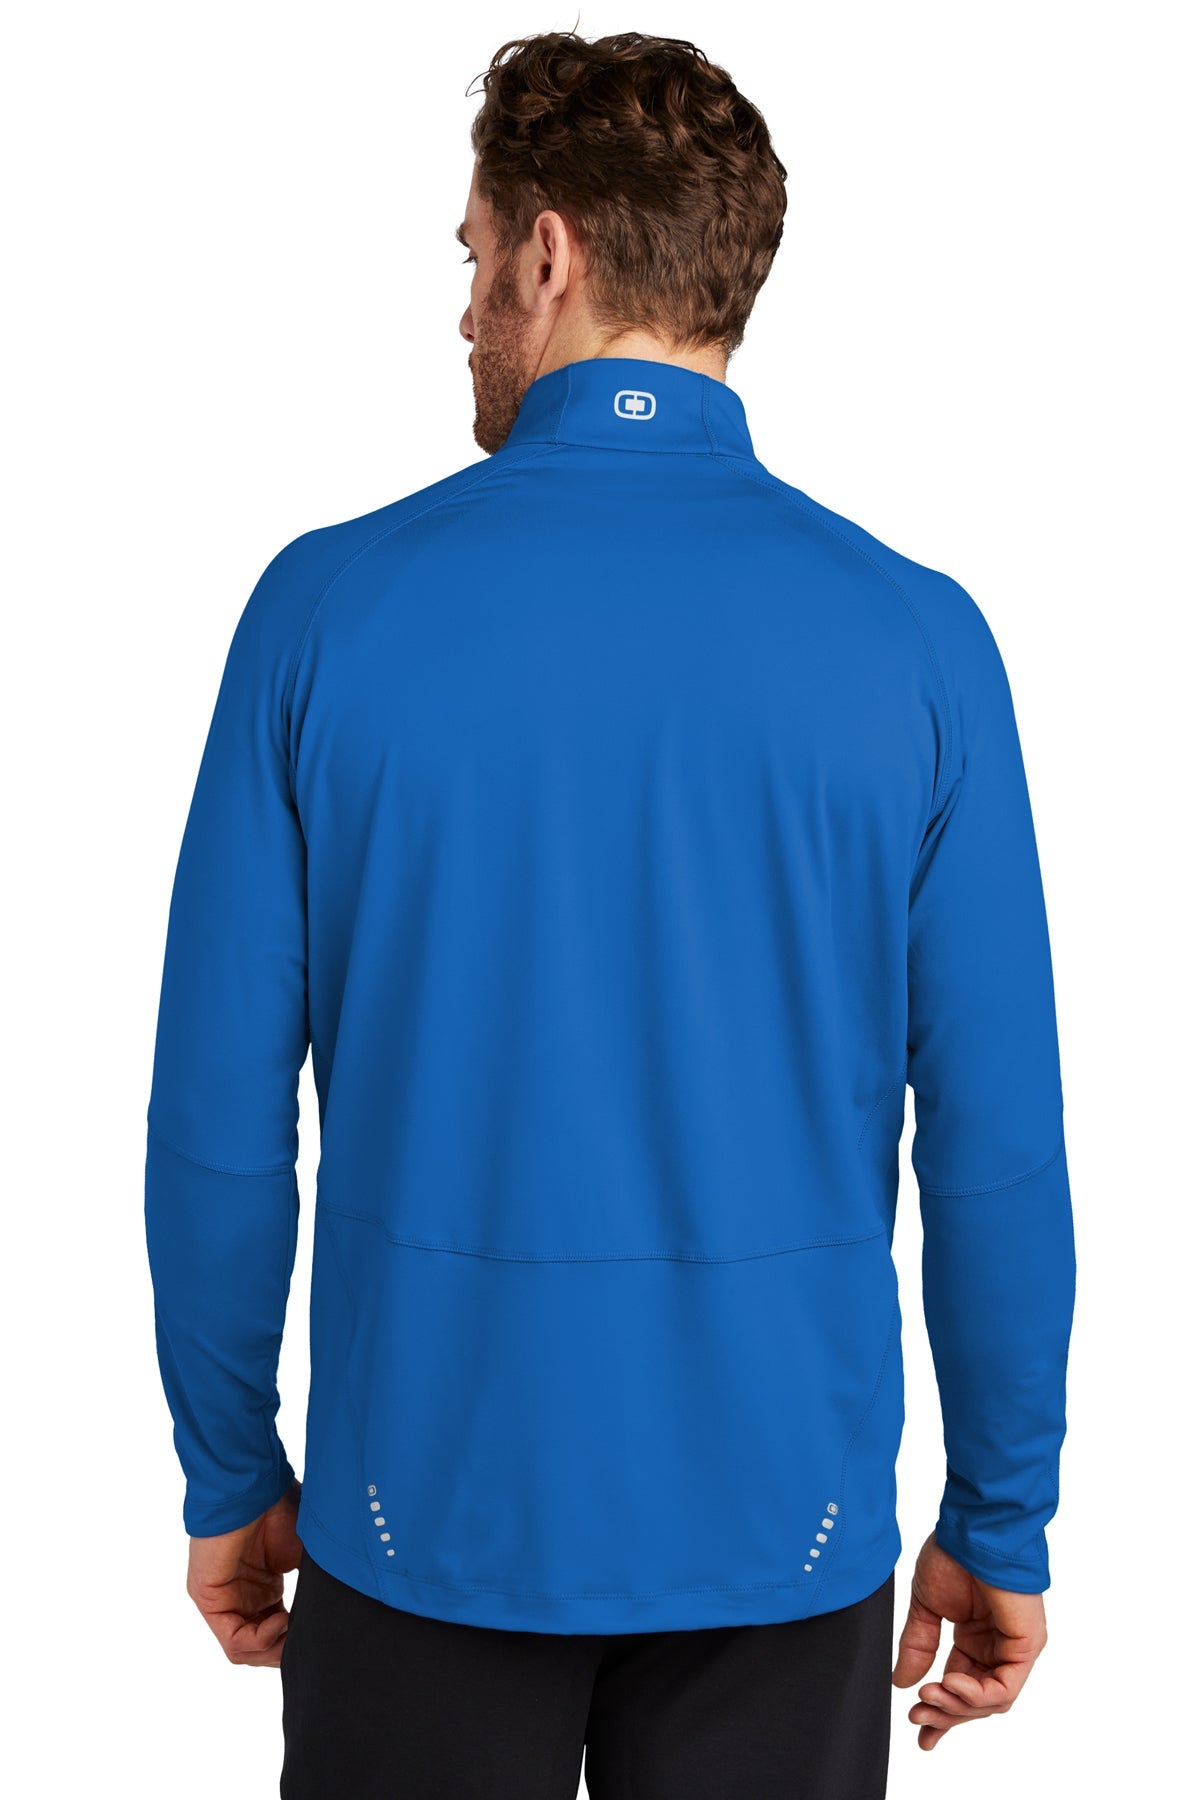 ogio endurance_oe550 _electric blue_company_logo_sweatshirts